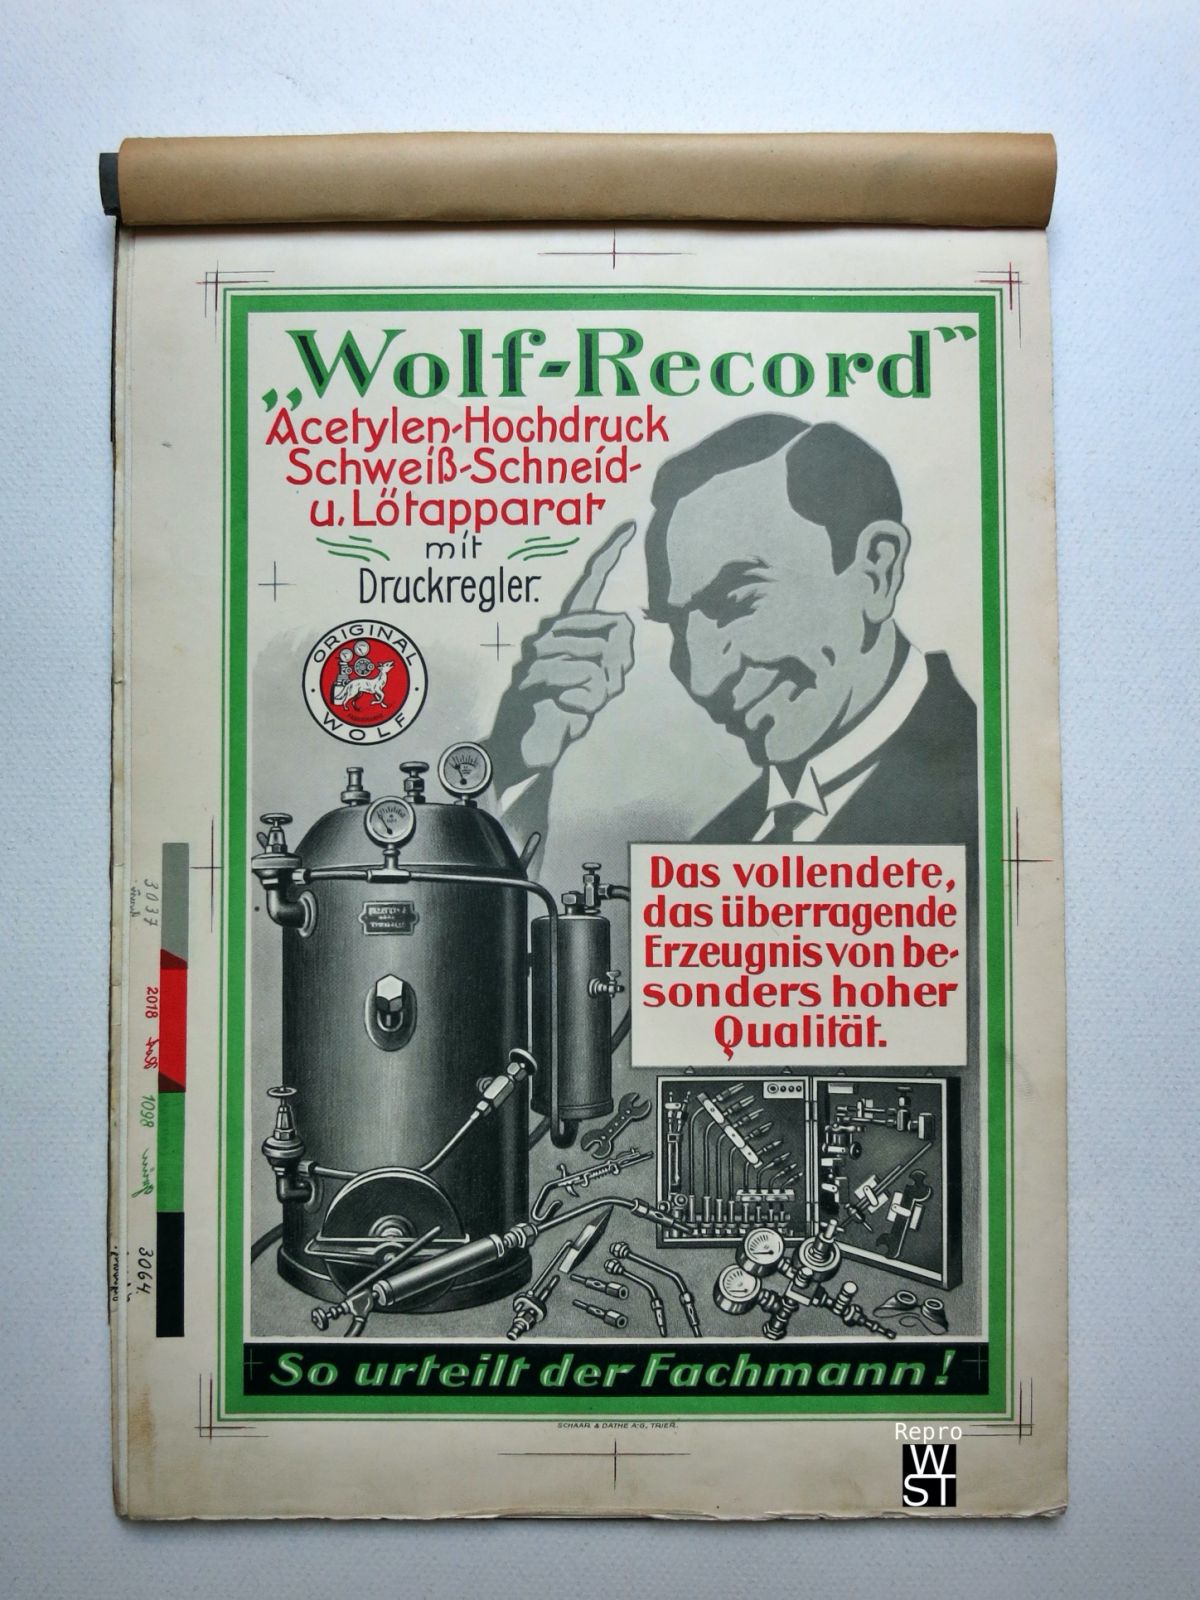 "Wolf-Record"